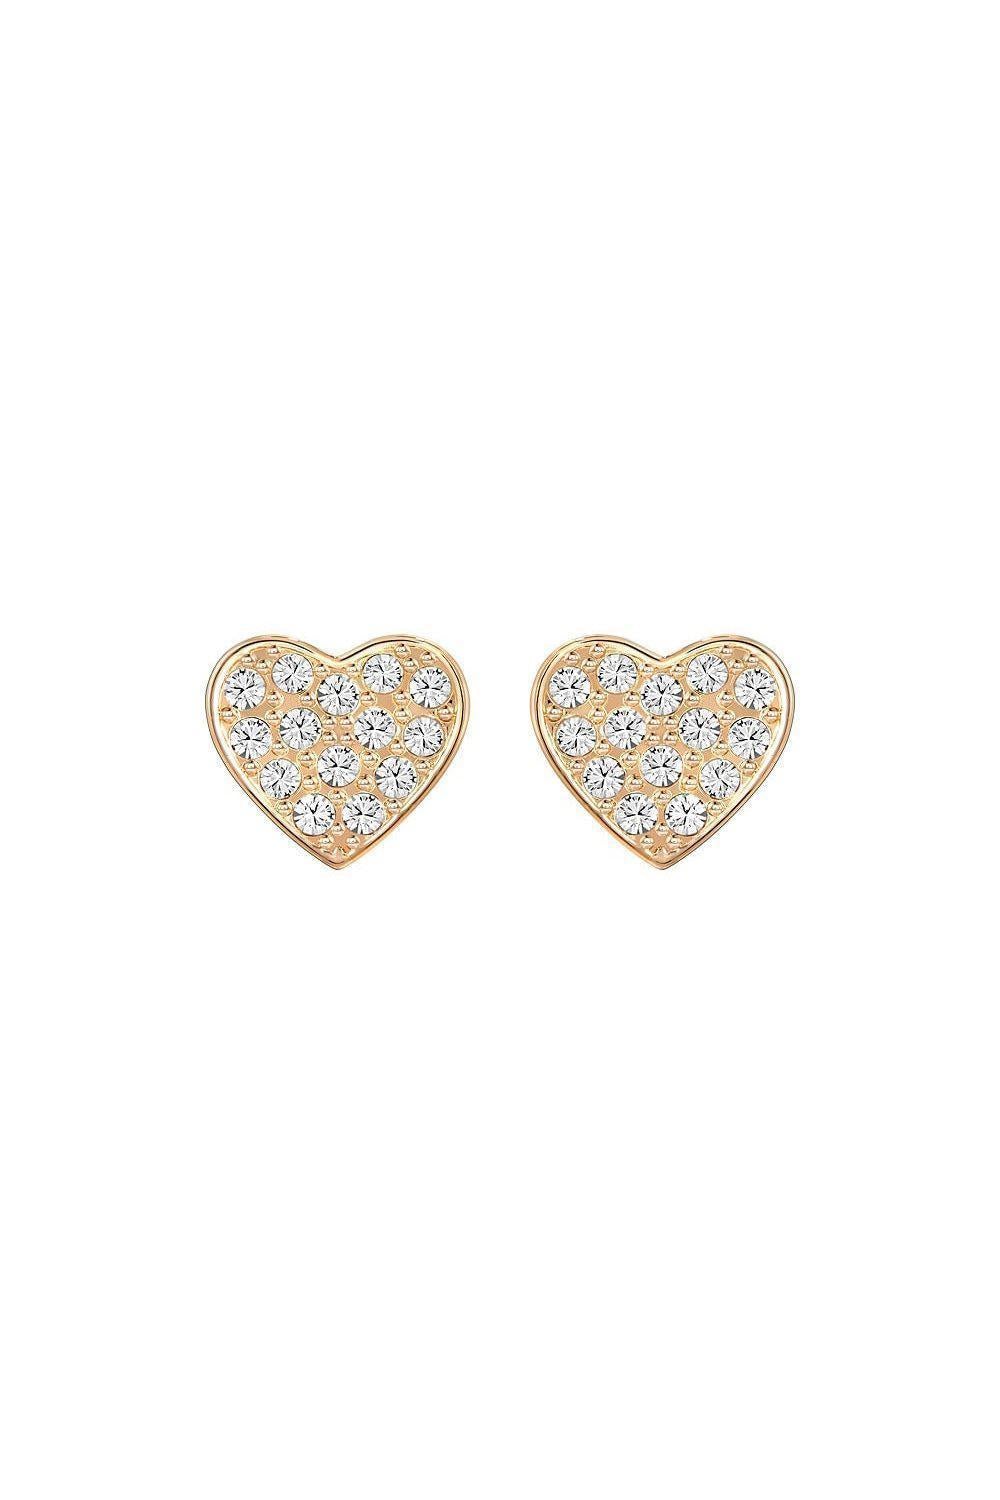 SWAROVSKI Yellow Gold Plated White Crystal Studded Heart Earring-Swarovski-The Freperie